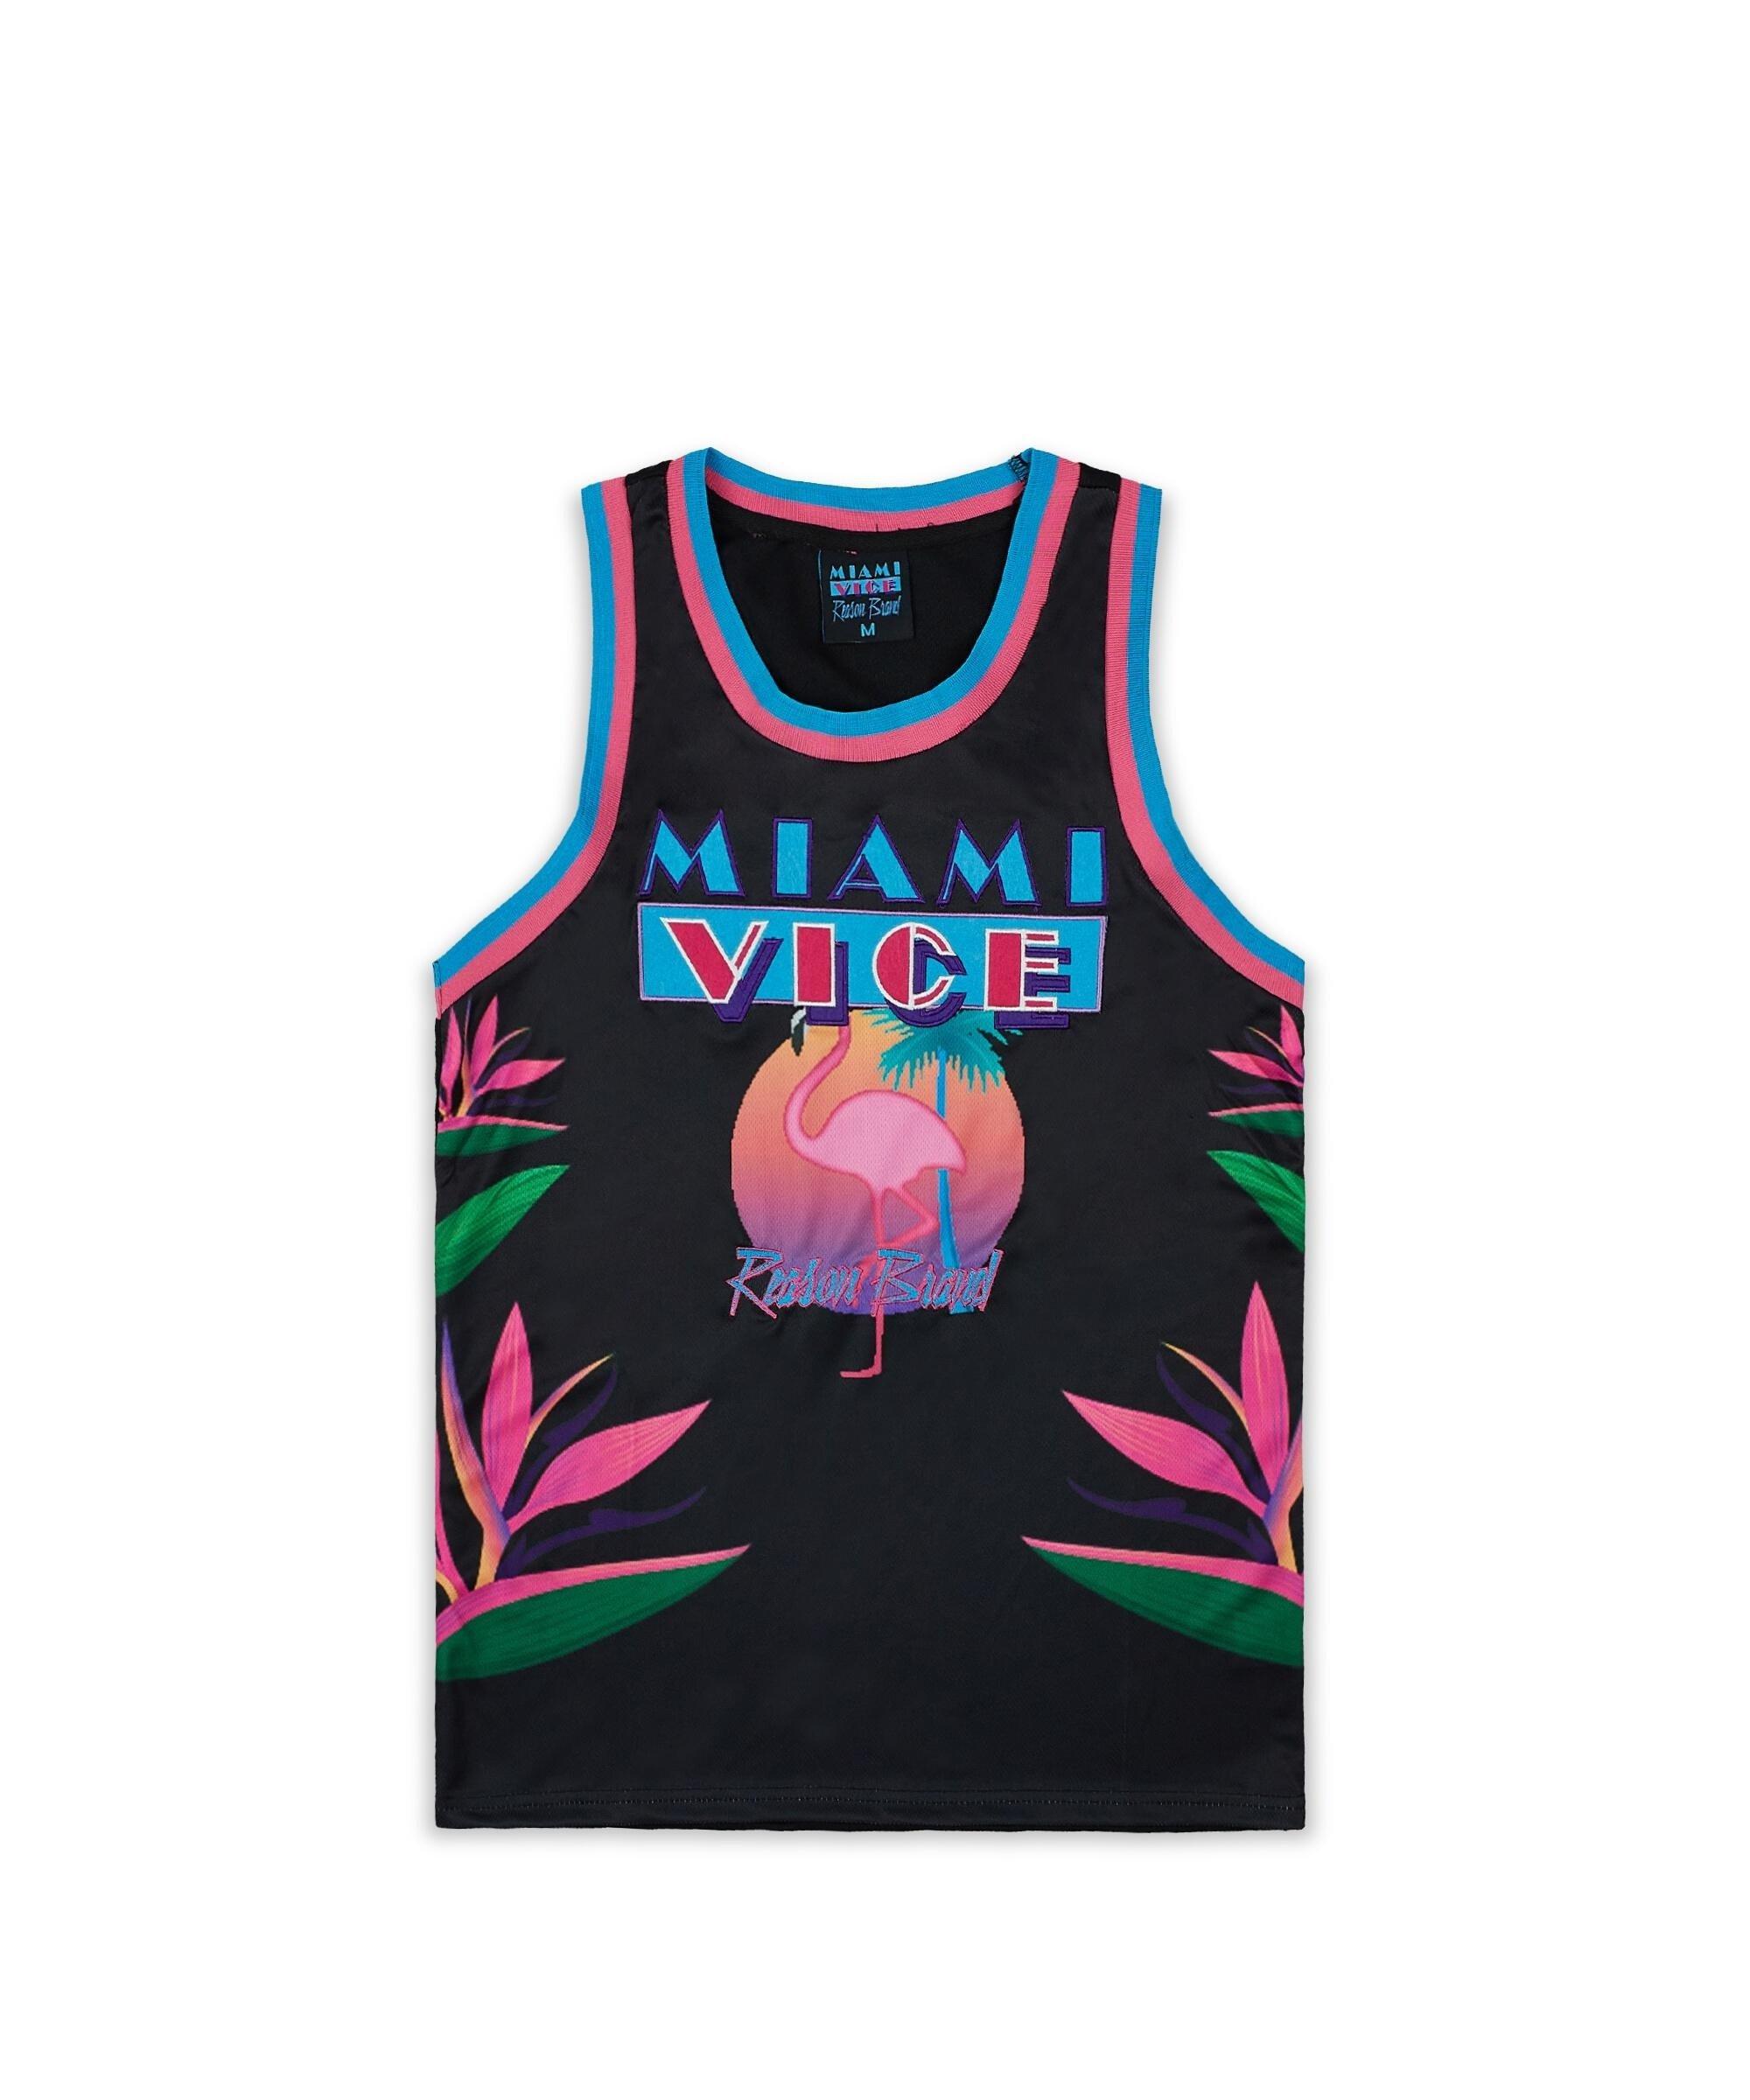 Miami Heat Vice Jersey - A Study In Successful Branding